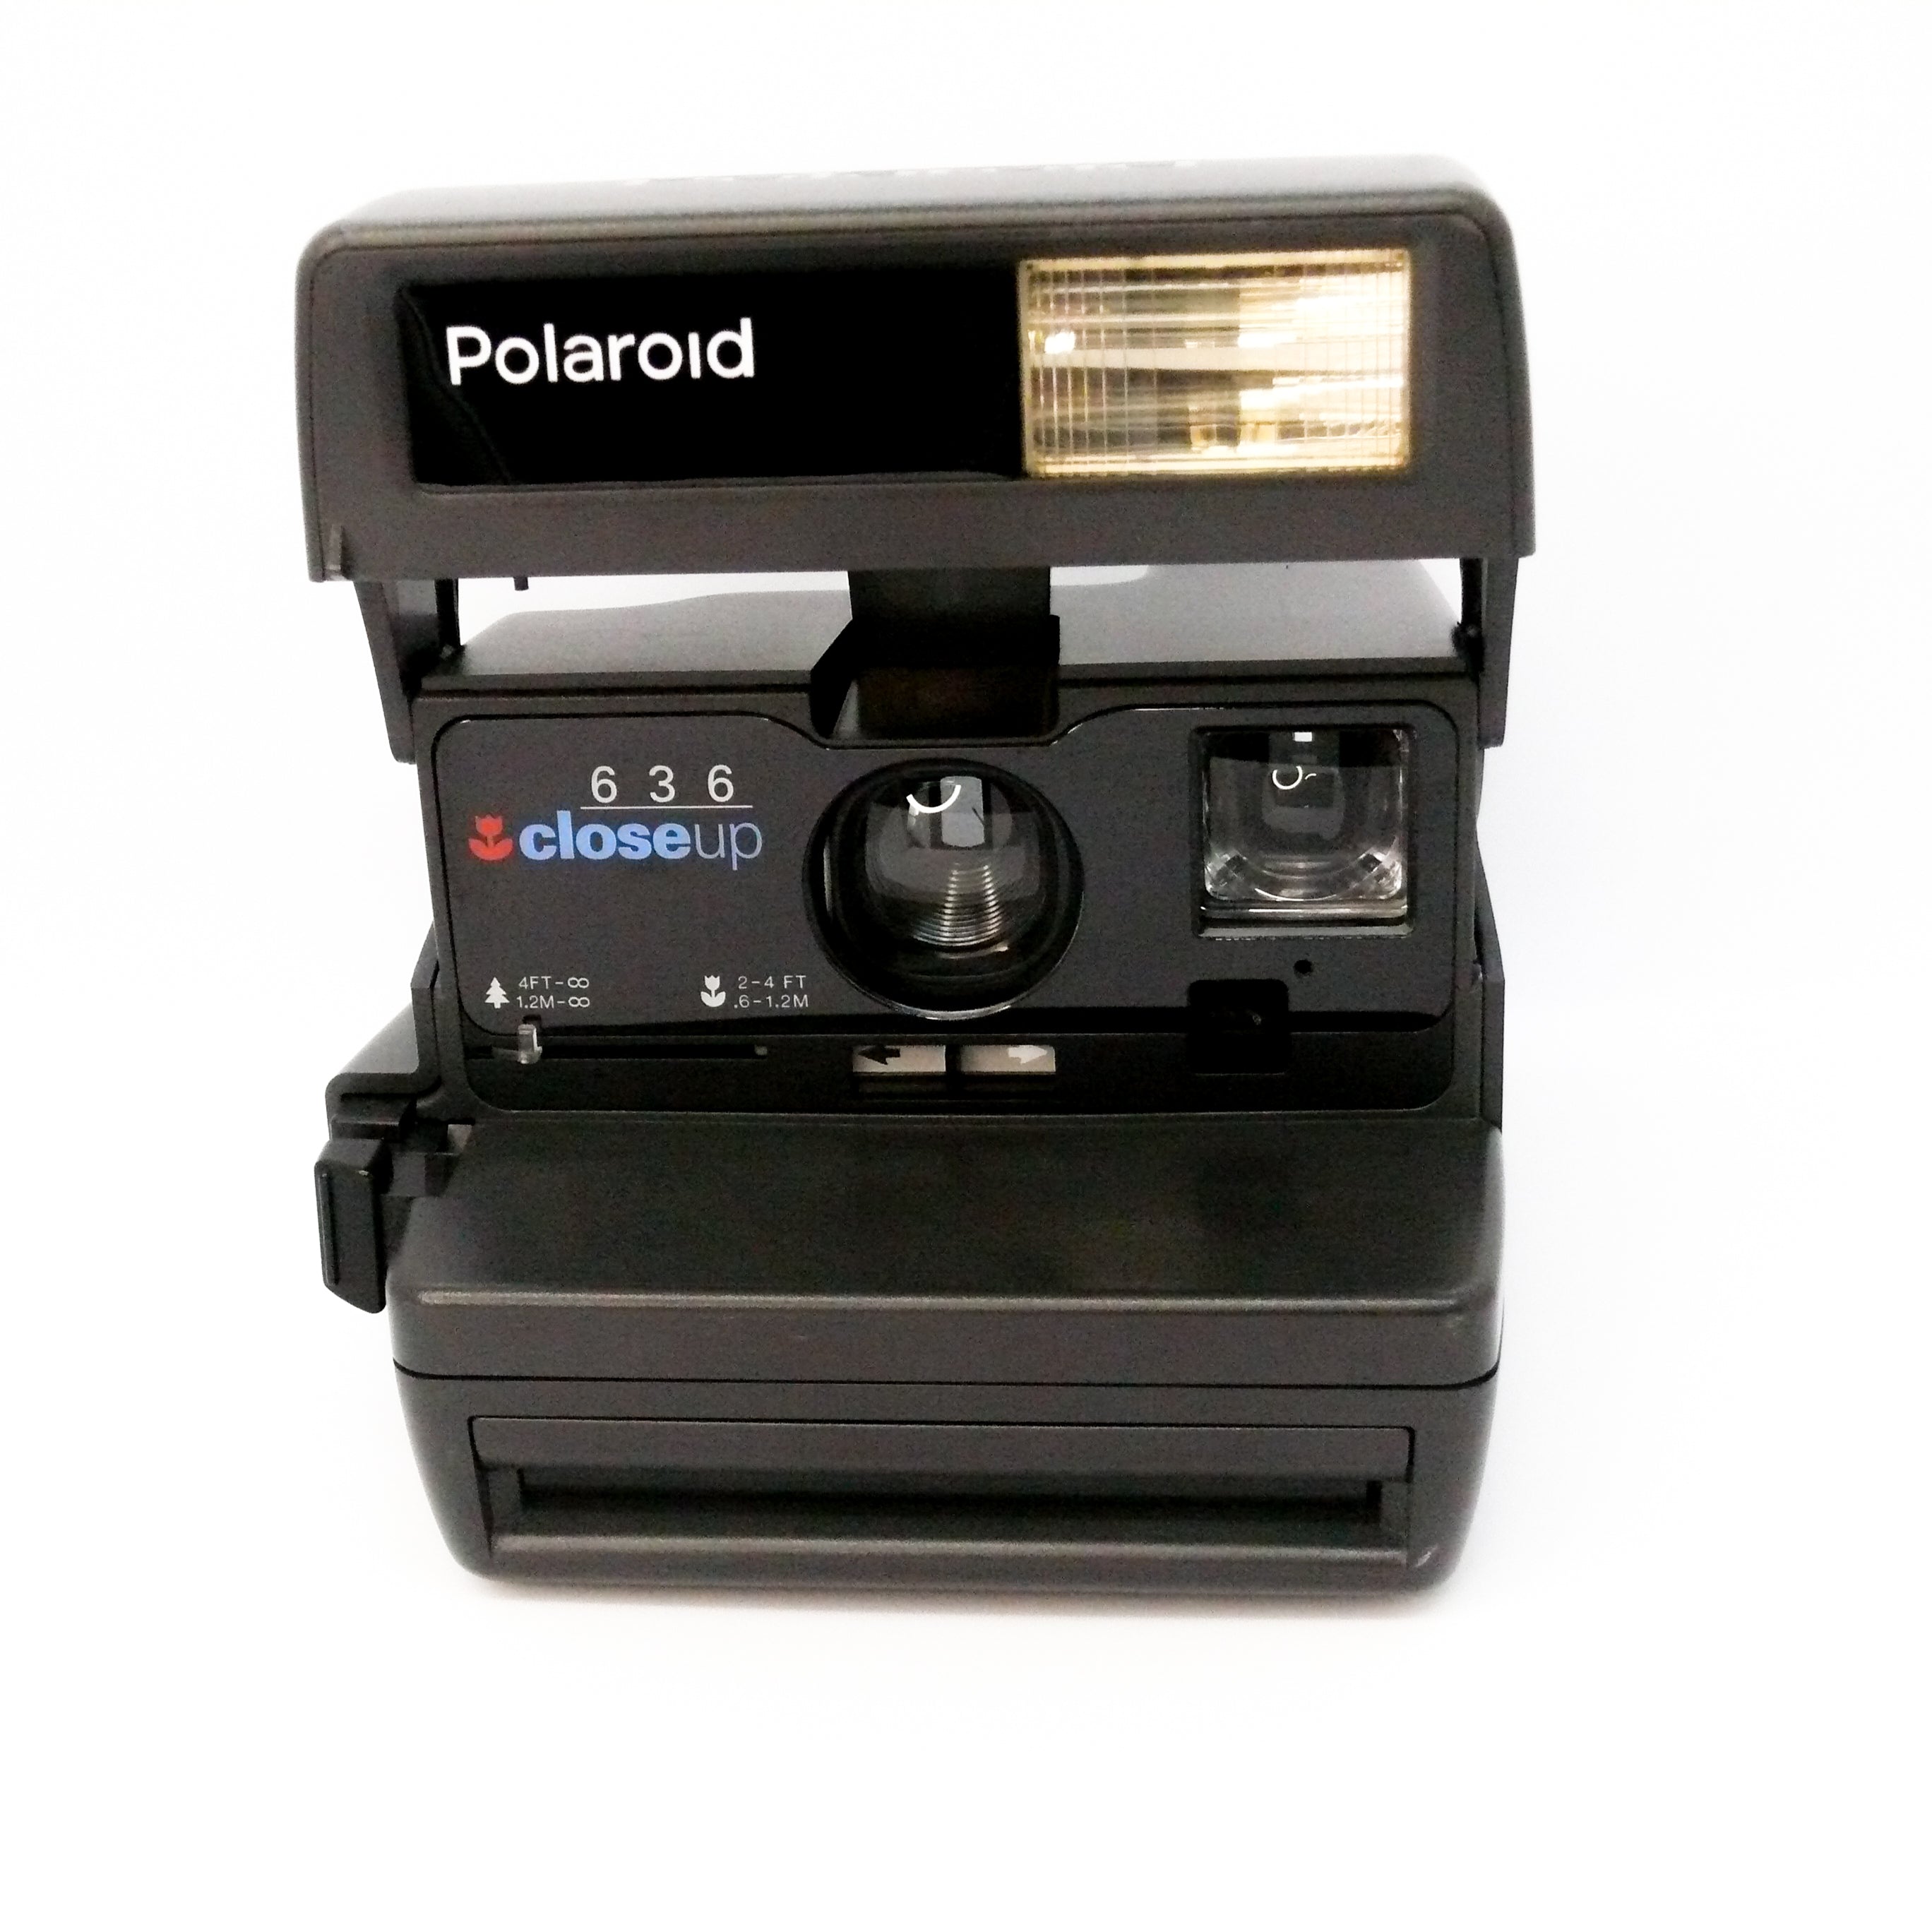 Polaroid 636 Closeup ポラロイドカメラ クローズアップ